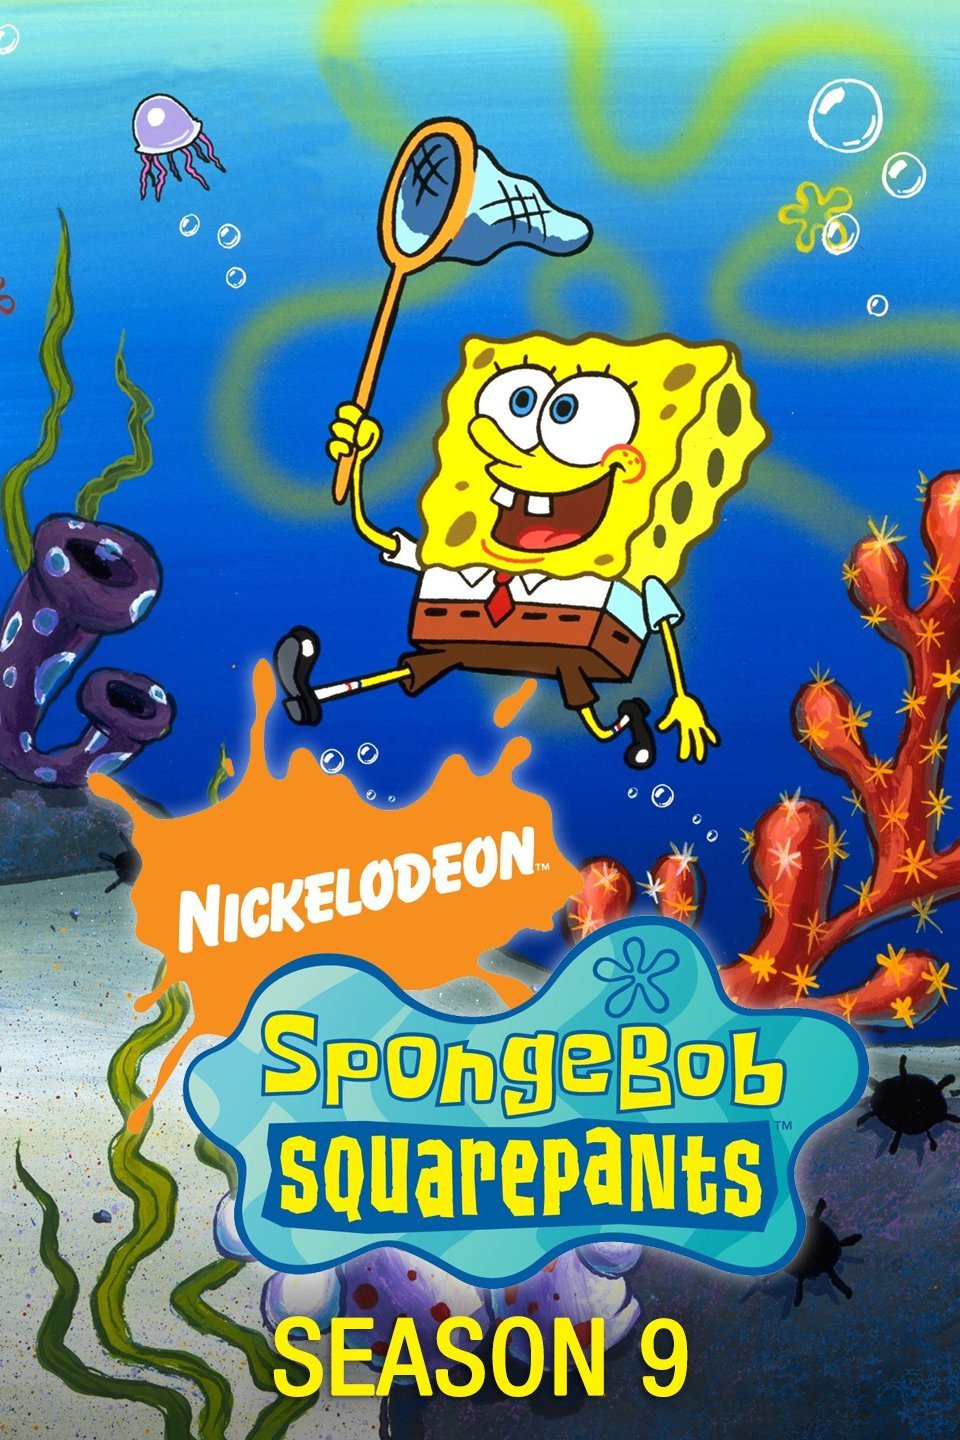 spongebob season 9 2016 episode lost in bikini bottom